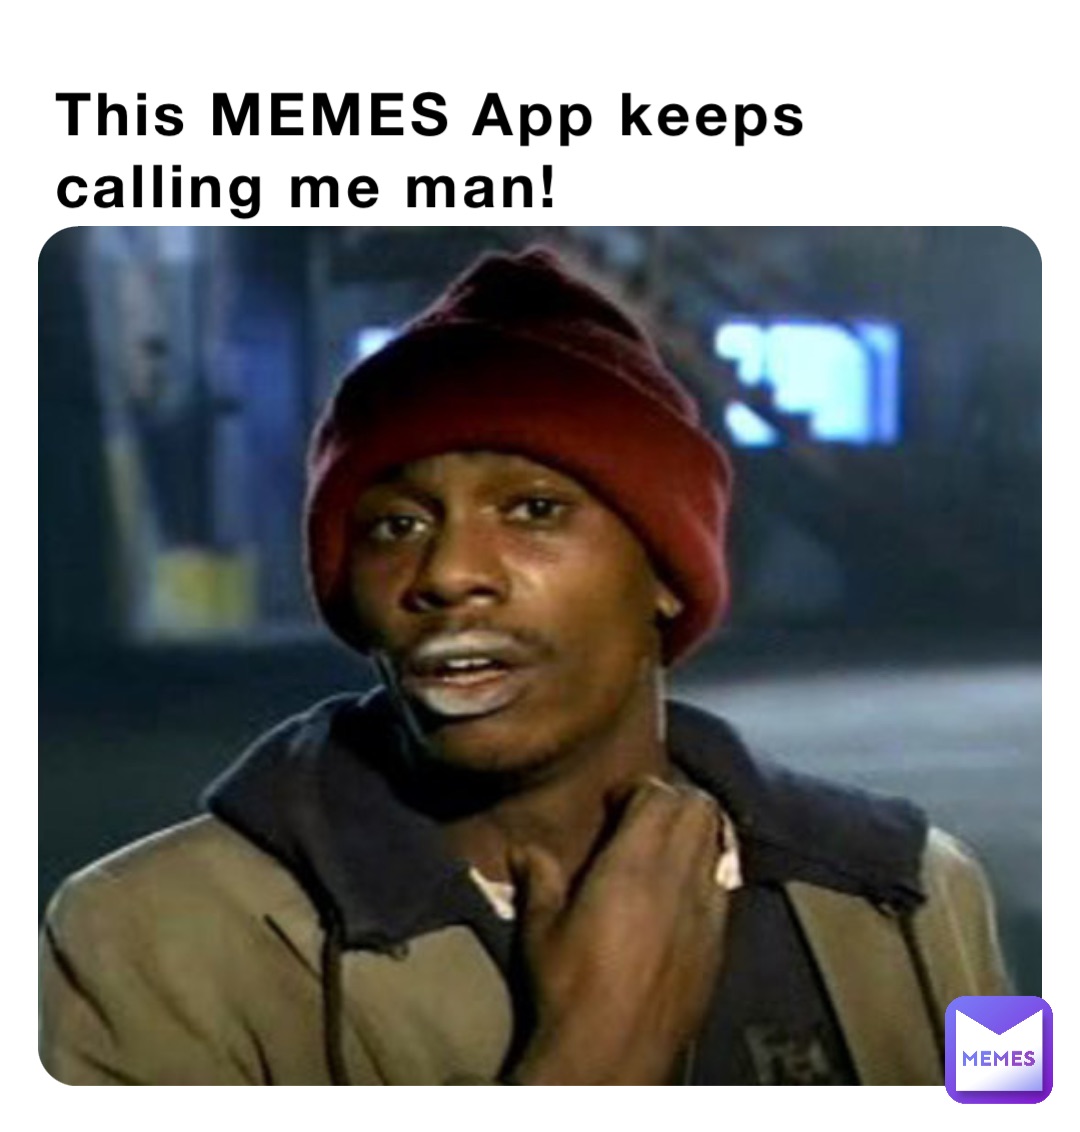 This MEMES App keeps calling me man!